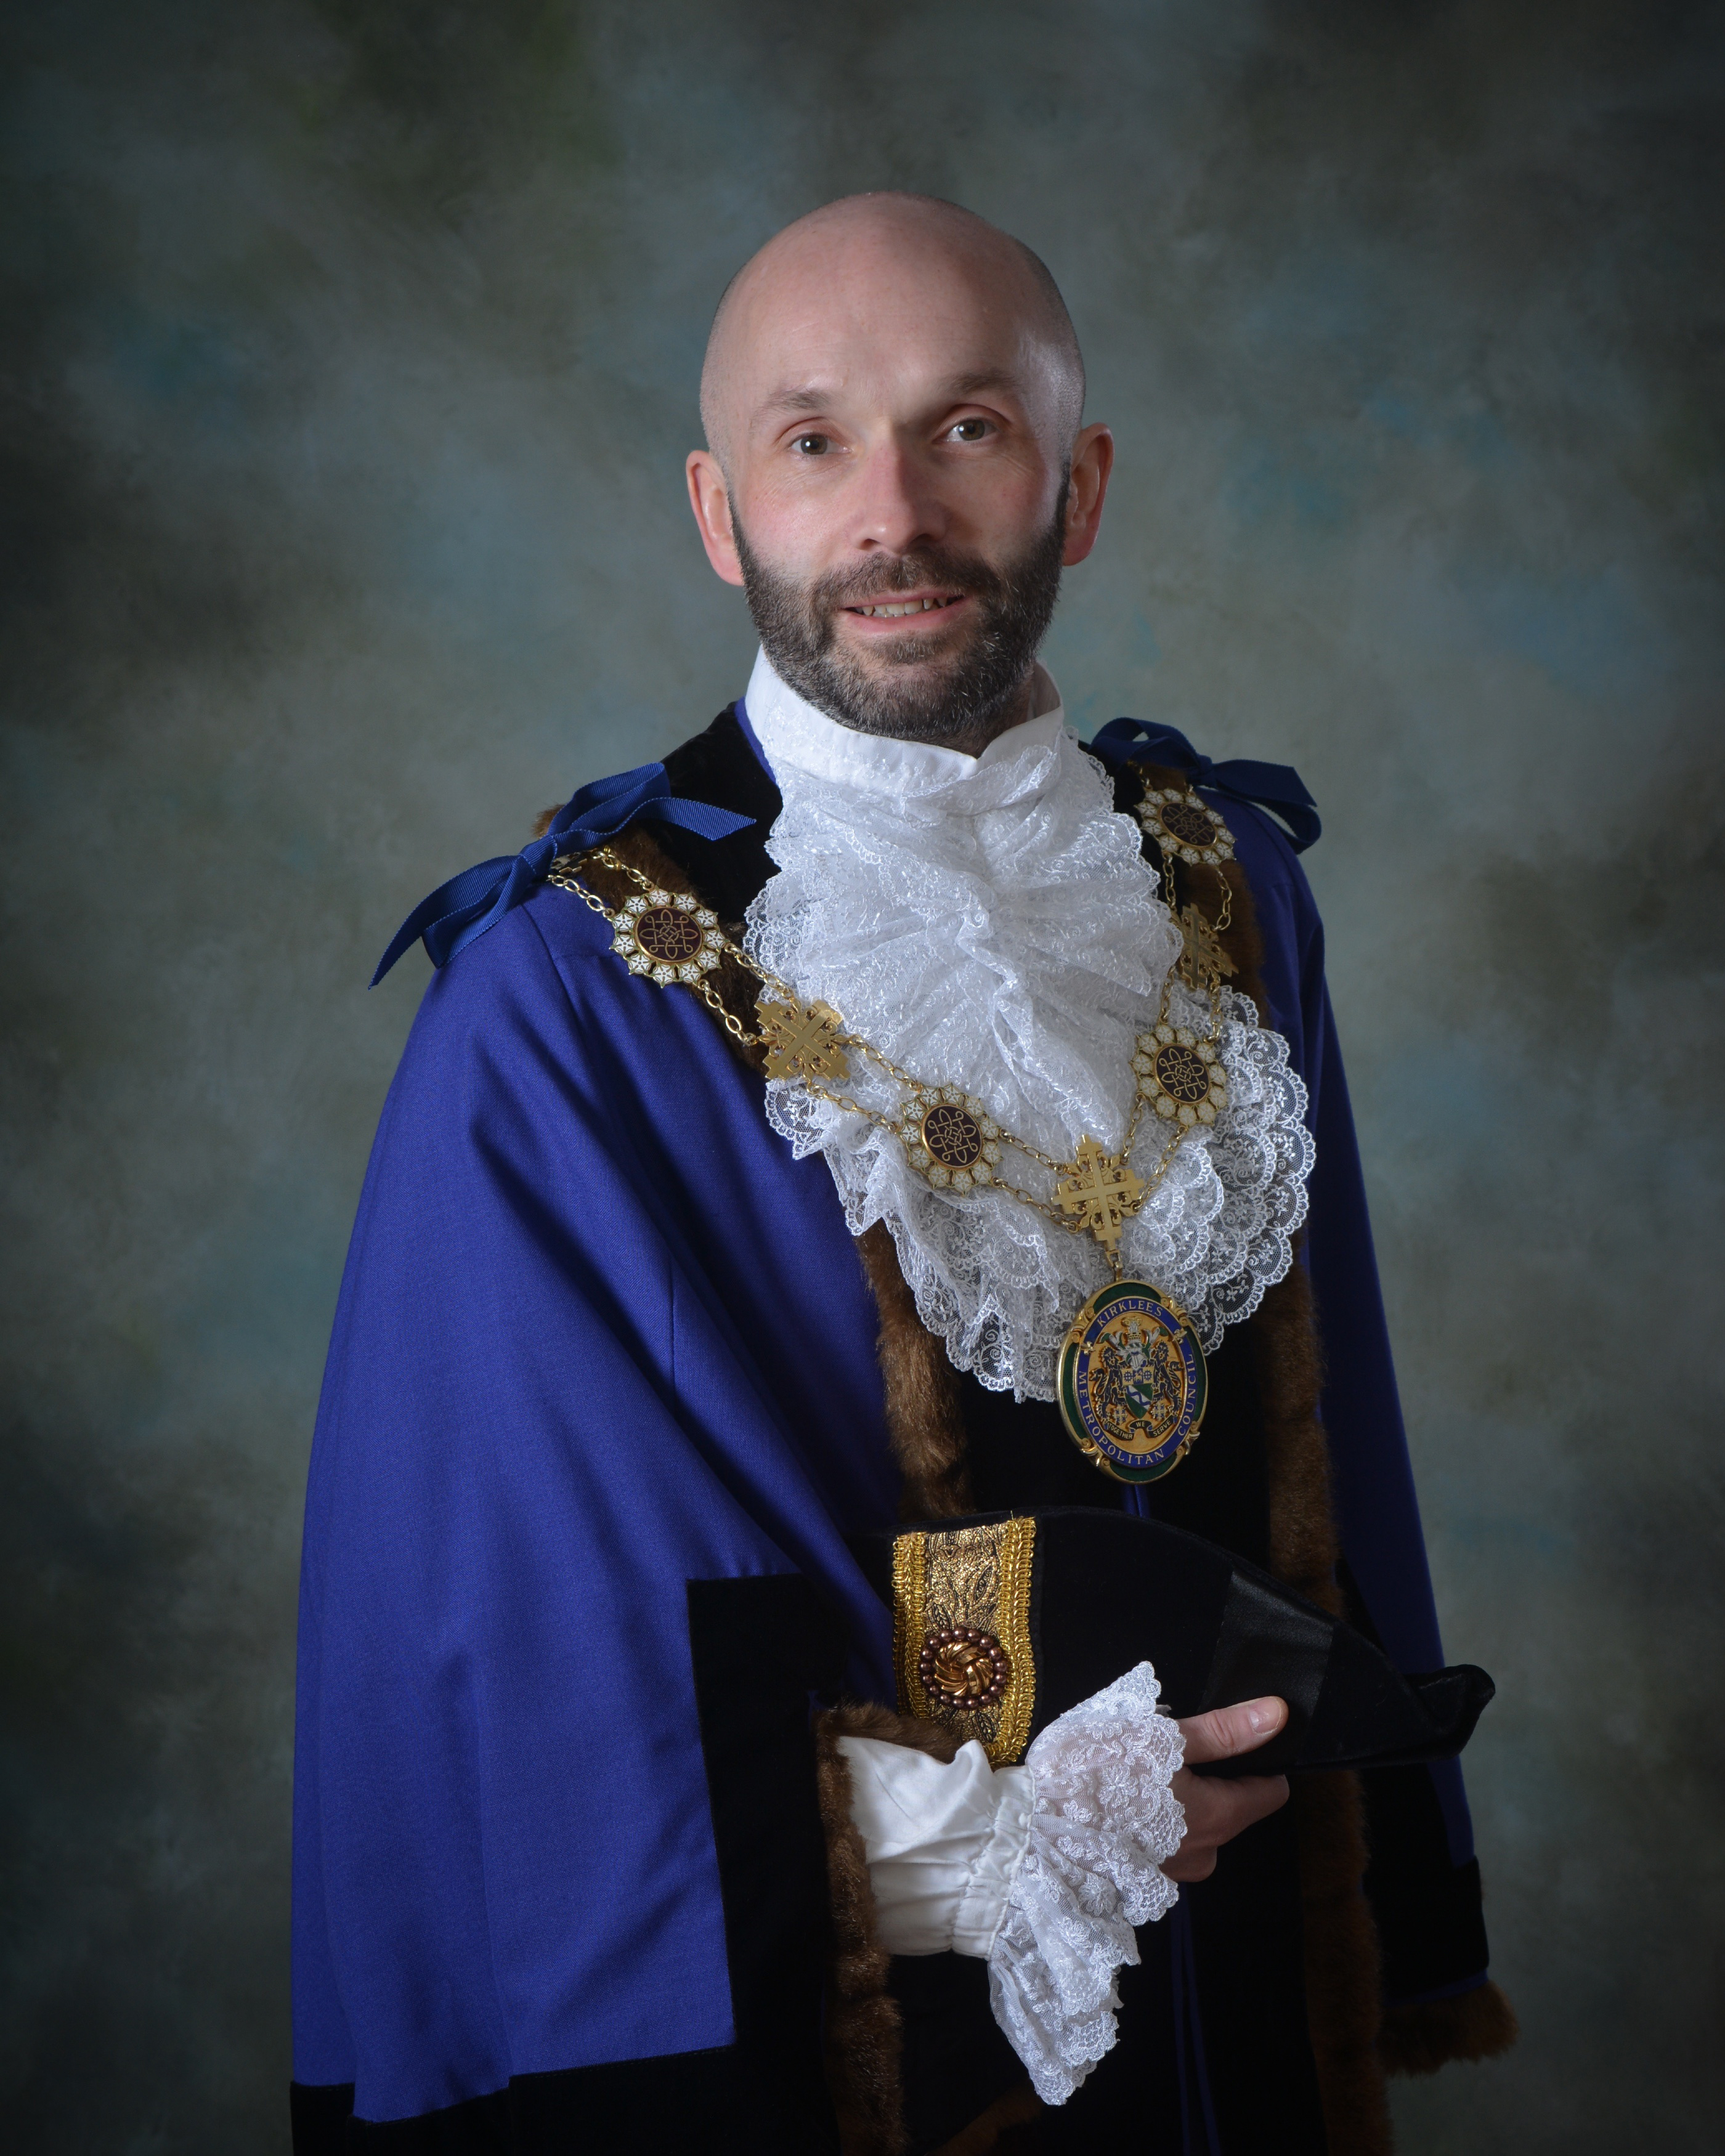 The Deputy Mayor of Kirklees, Councillor Cahal Burke